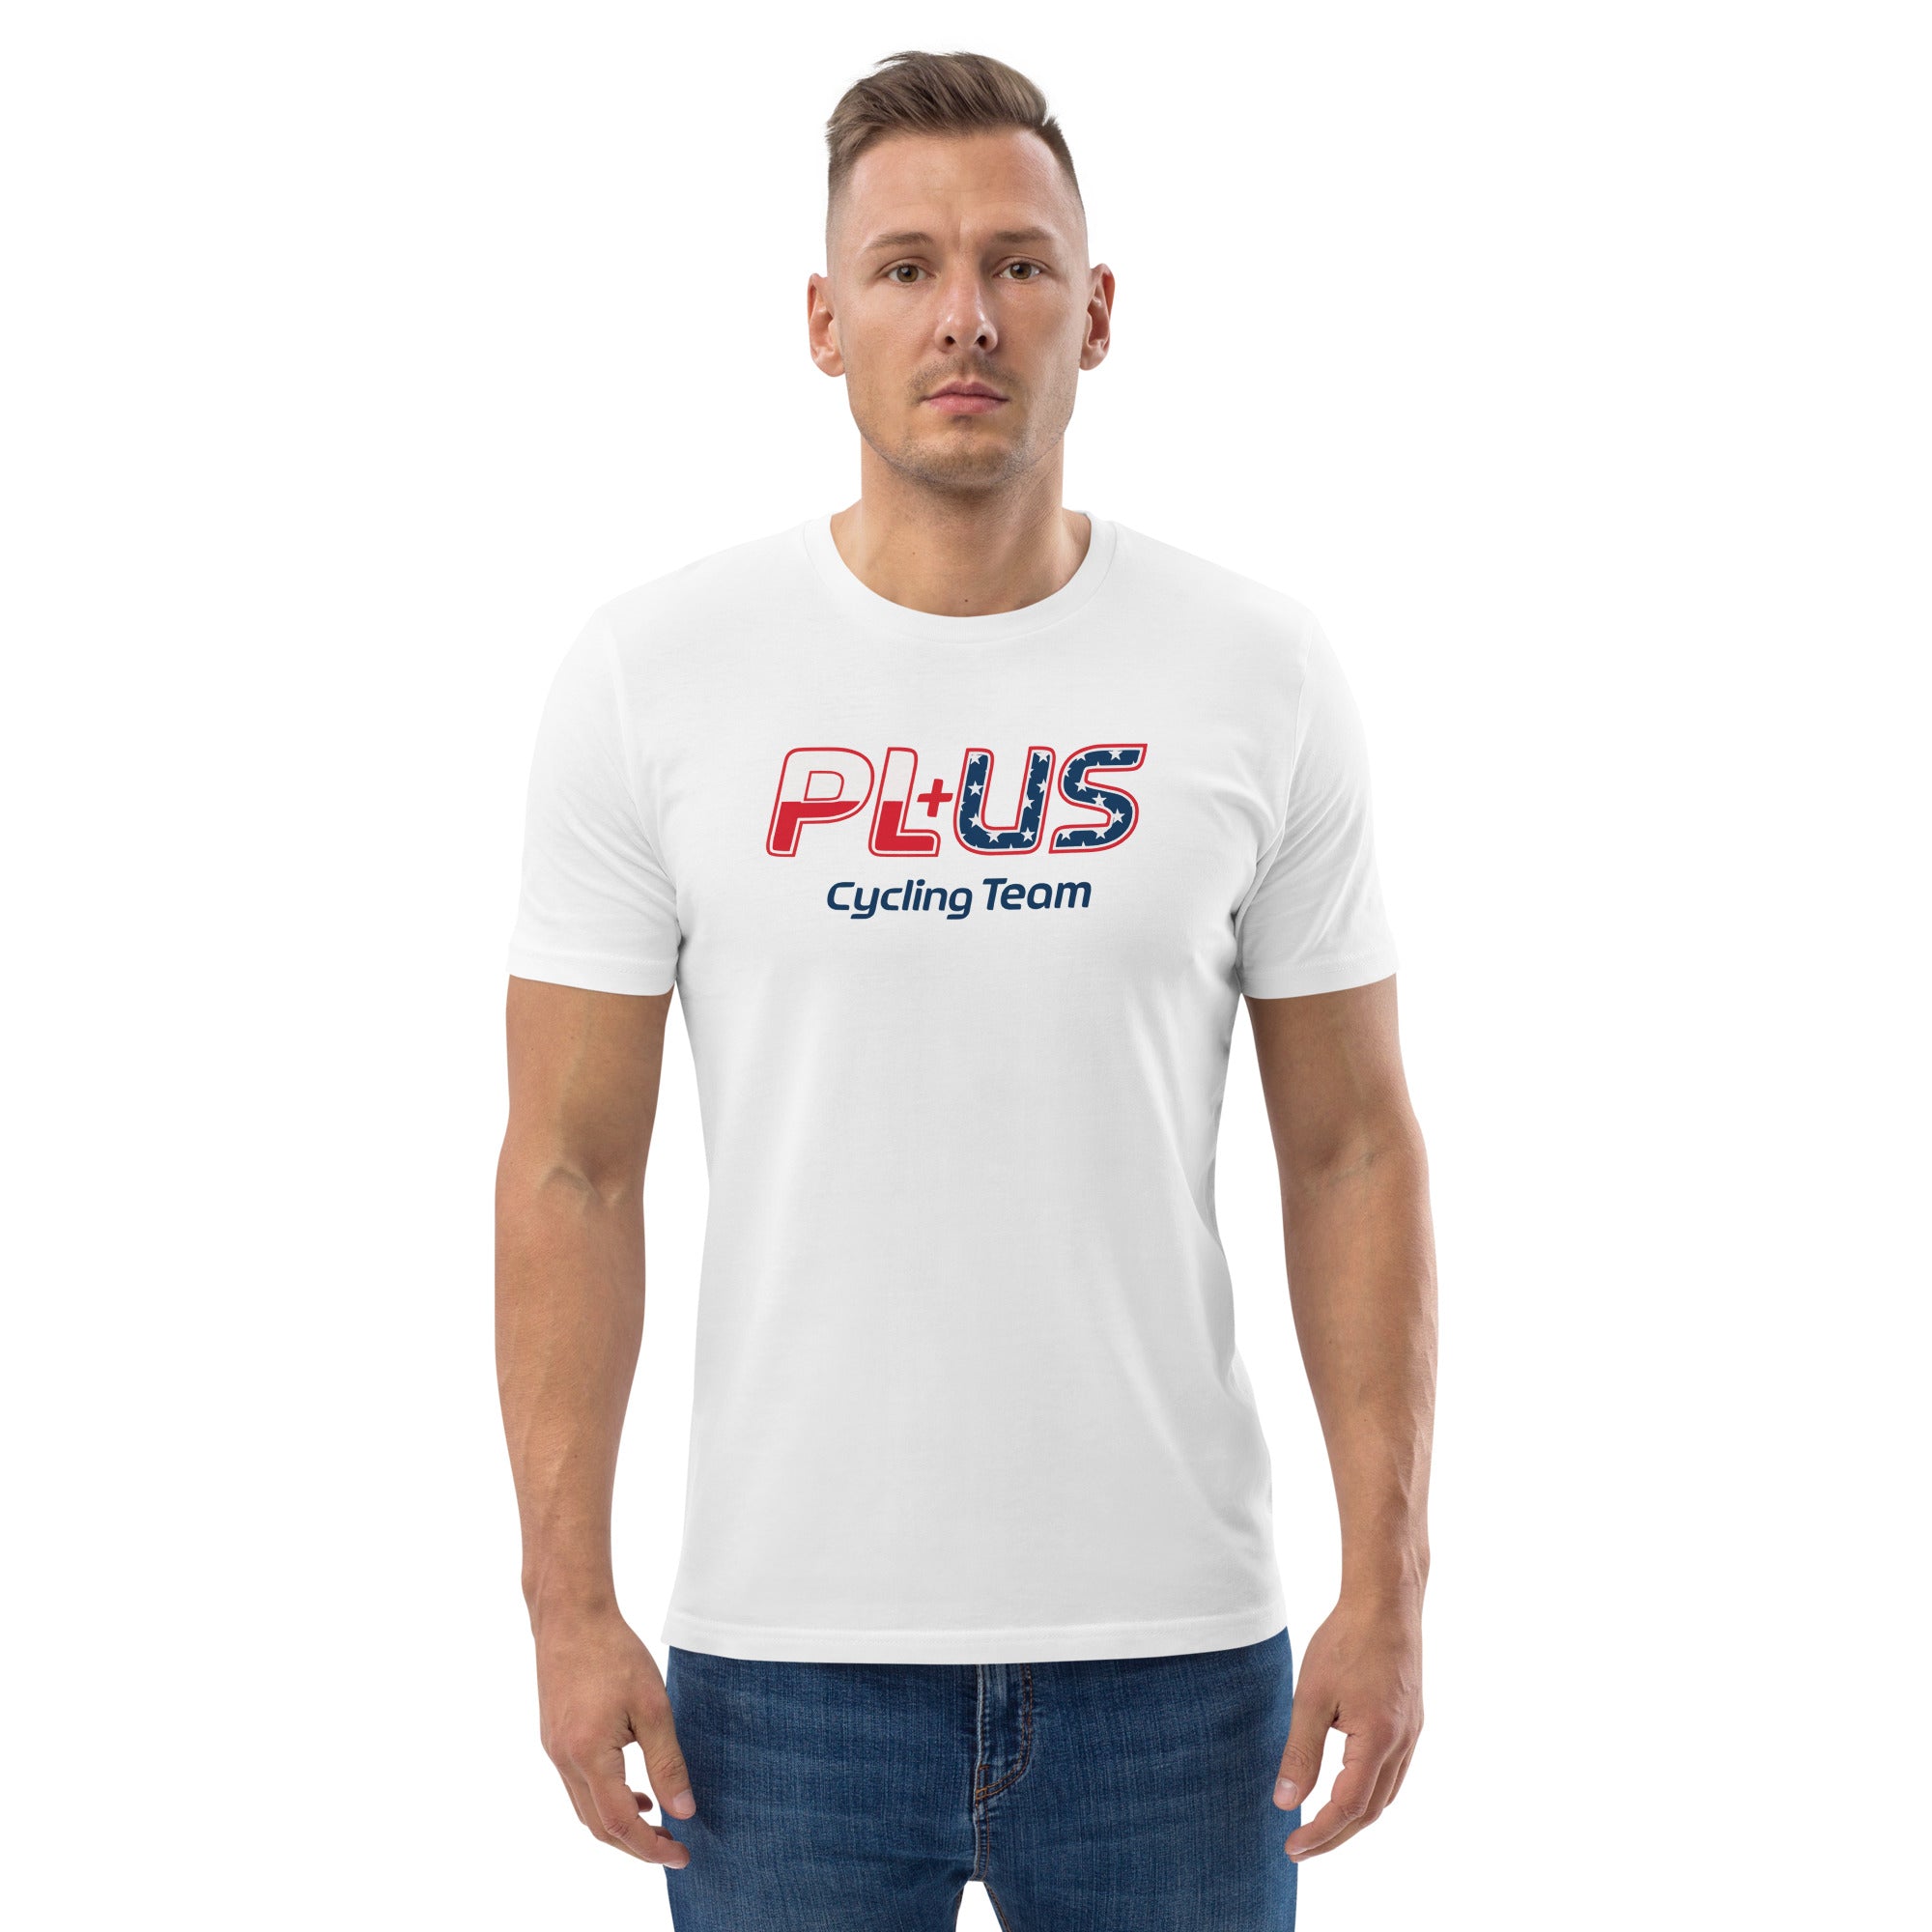 PLUS Cycling Team cotton t-shirt